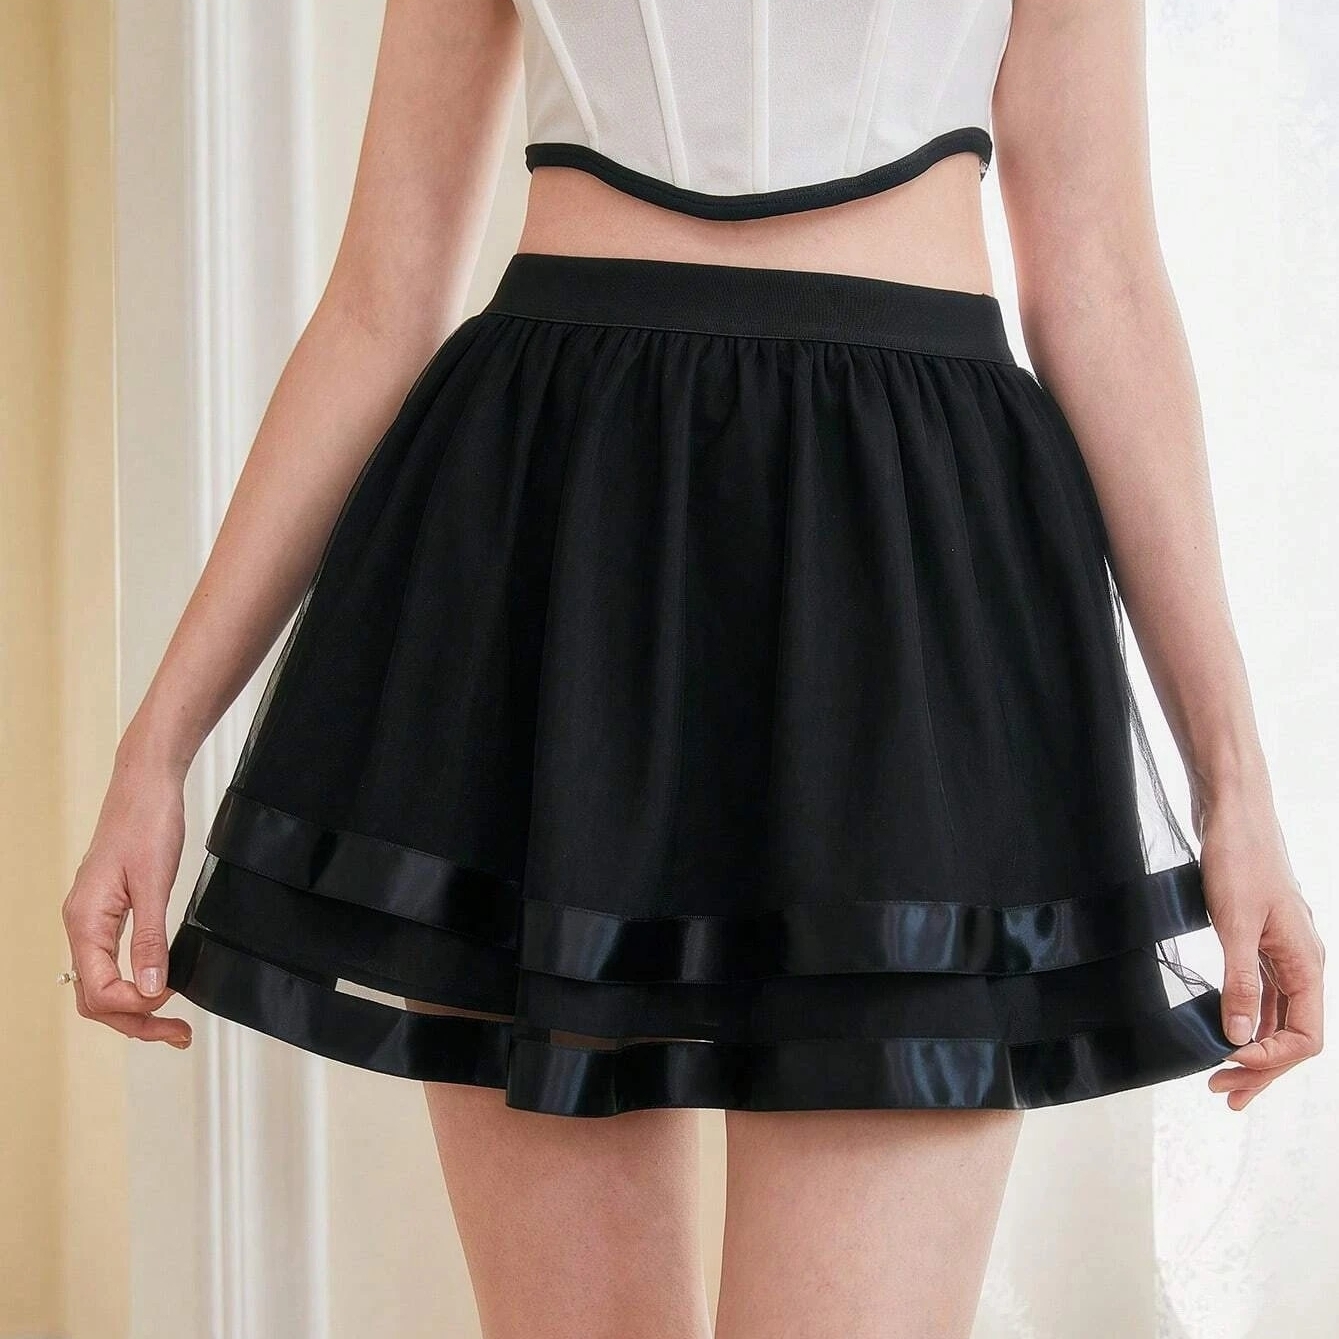 Solid Mesh Overlay Skirt - Medium